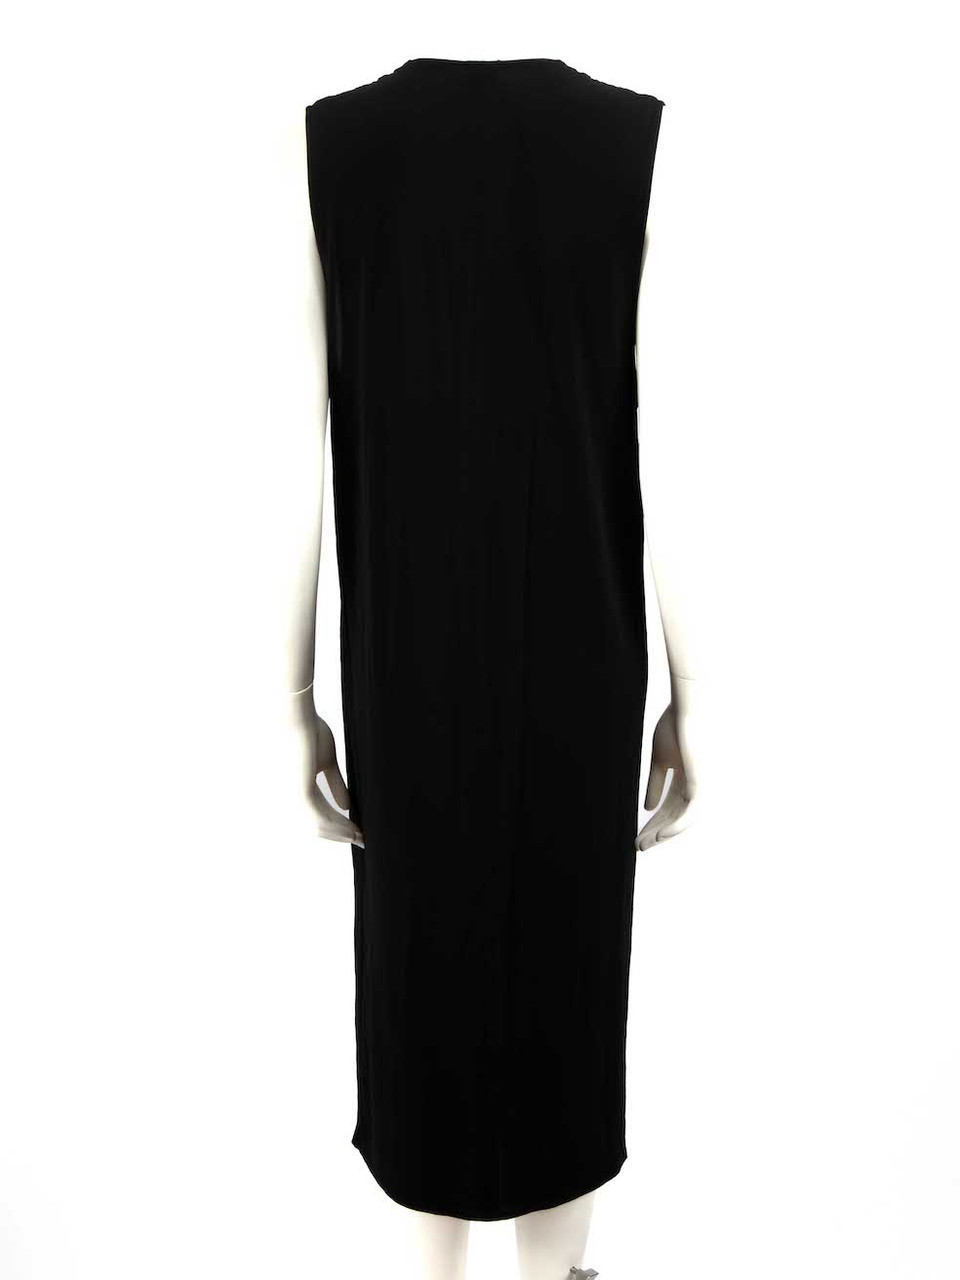 Helmut Lang Black Sleeveless Layered Dress